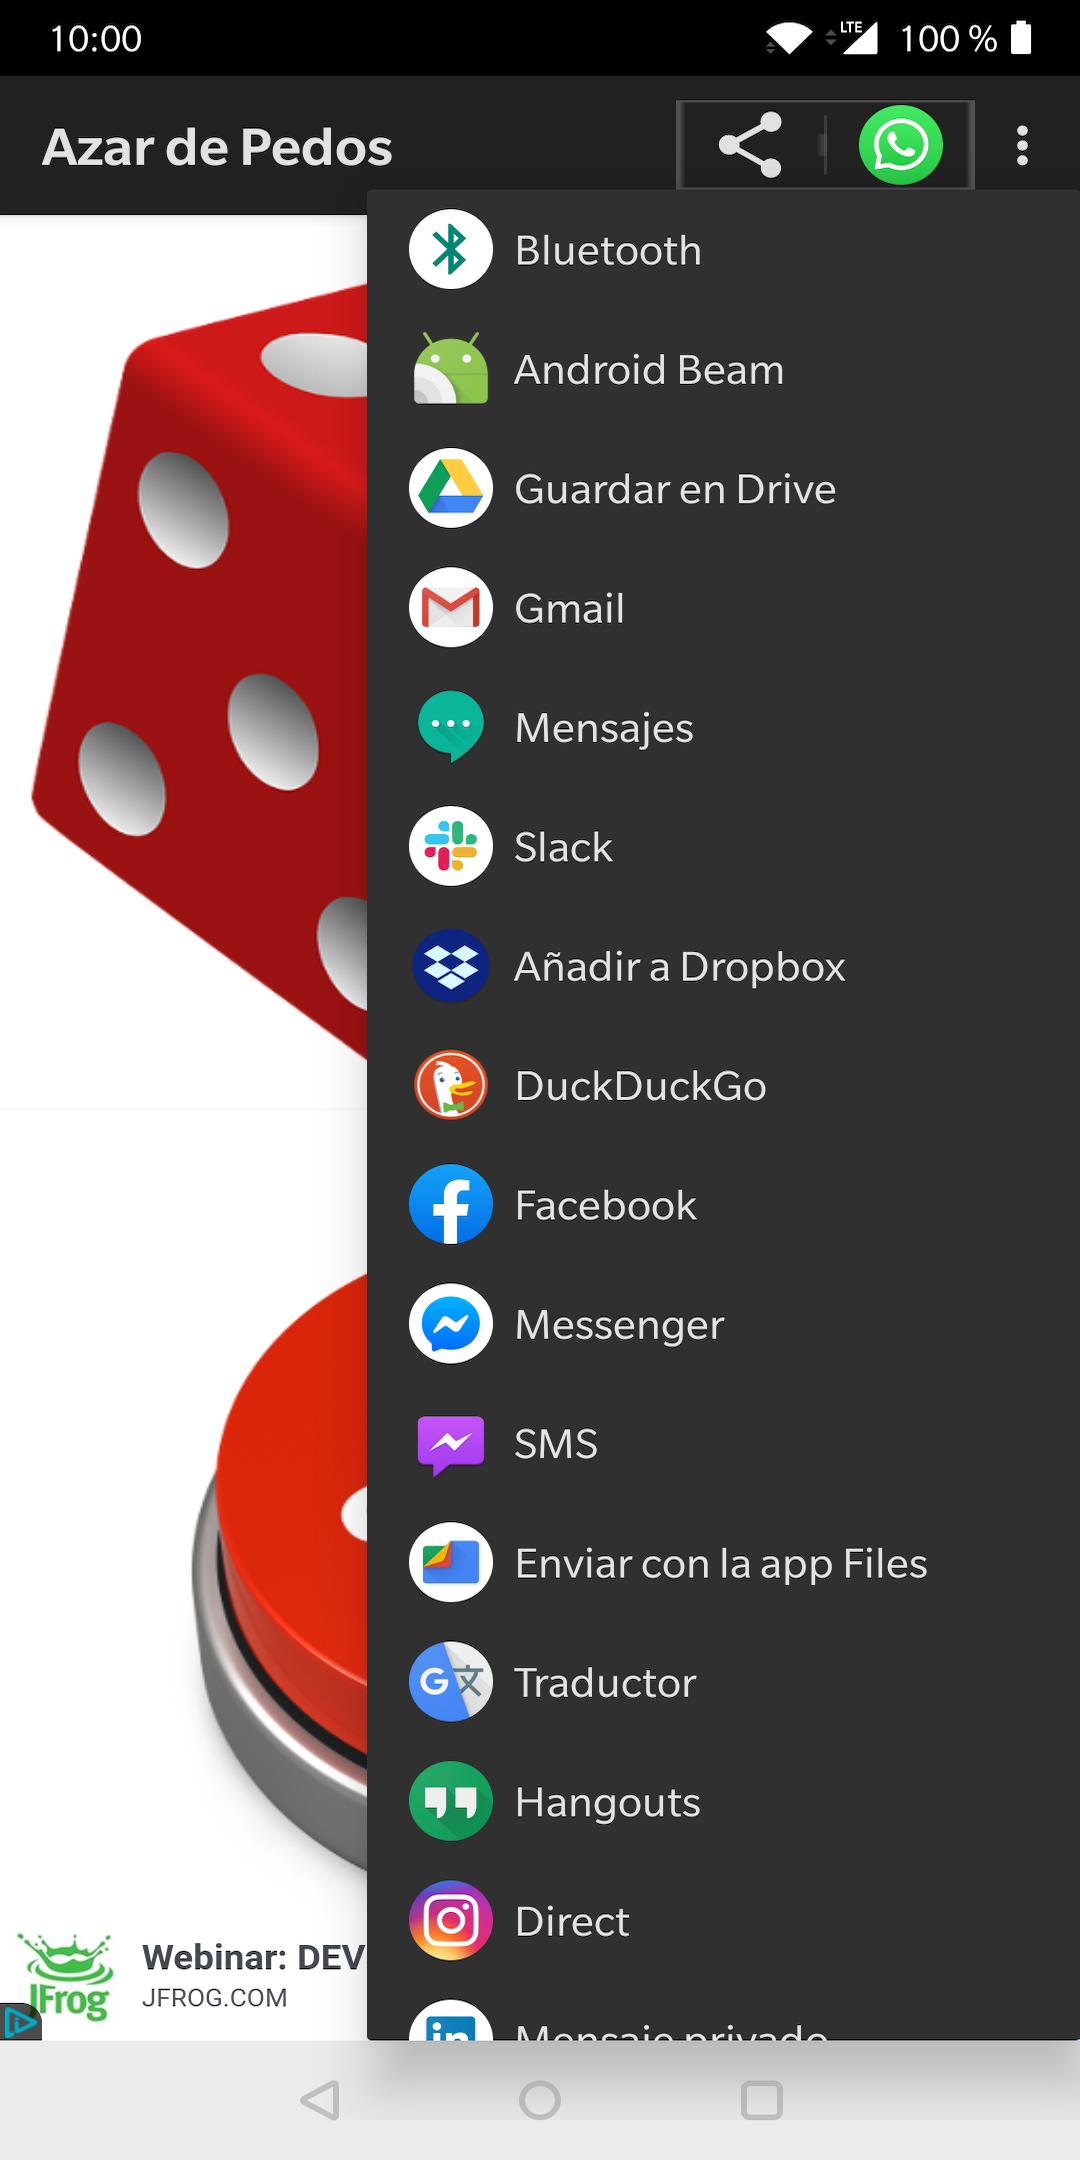 Azar De Pedos For Android Apk Download - el simulador de pedos roblox